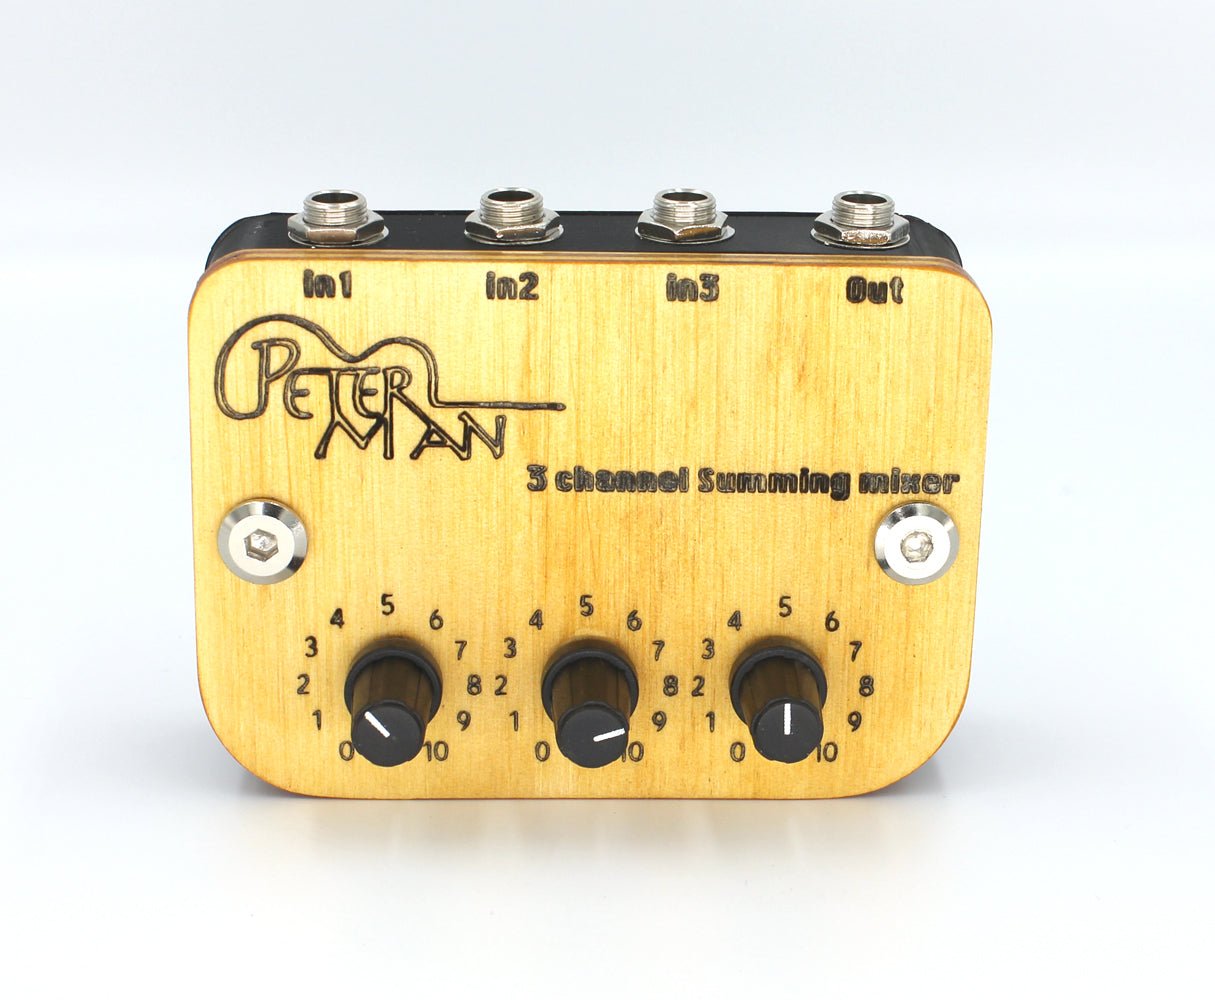 Mixer 3 channel passive summing - Peterman Acoustic custom